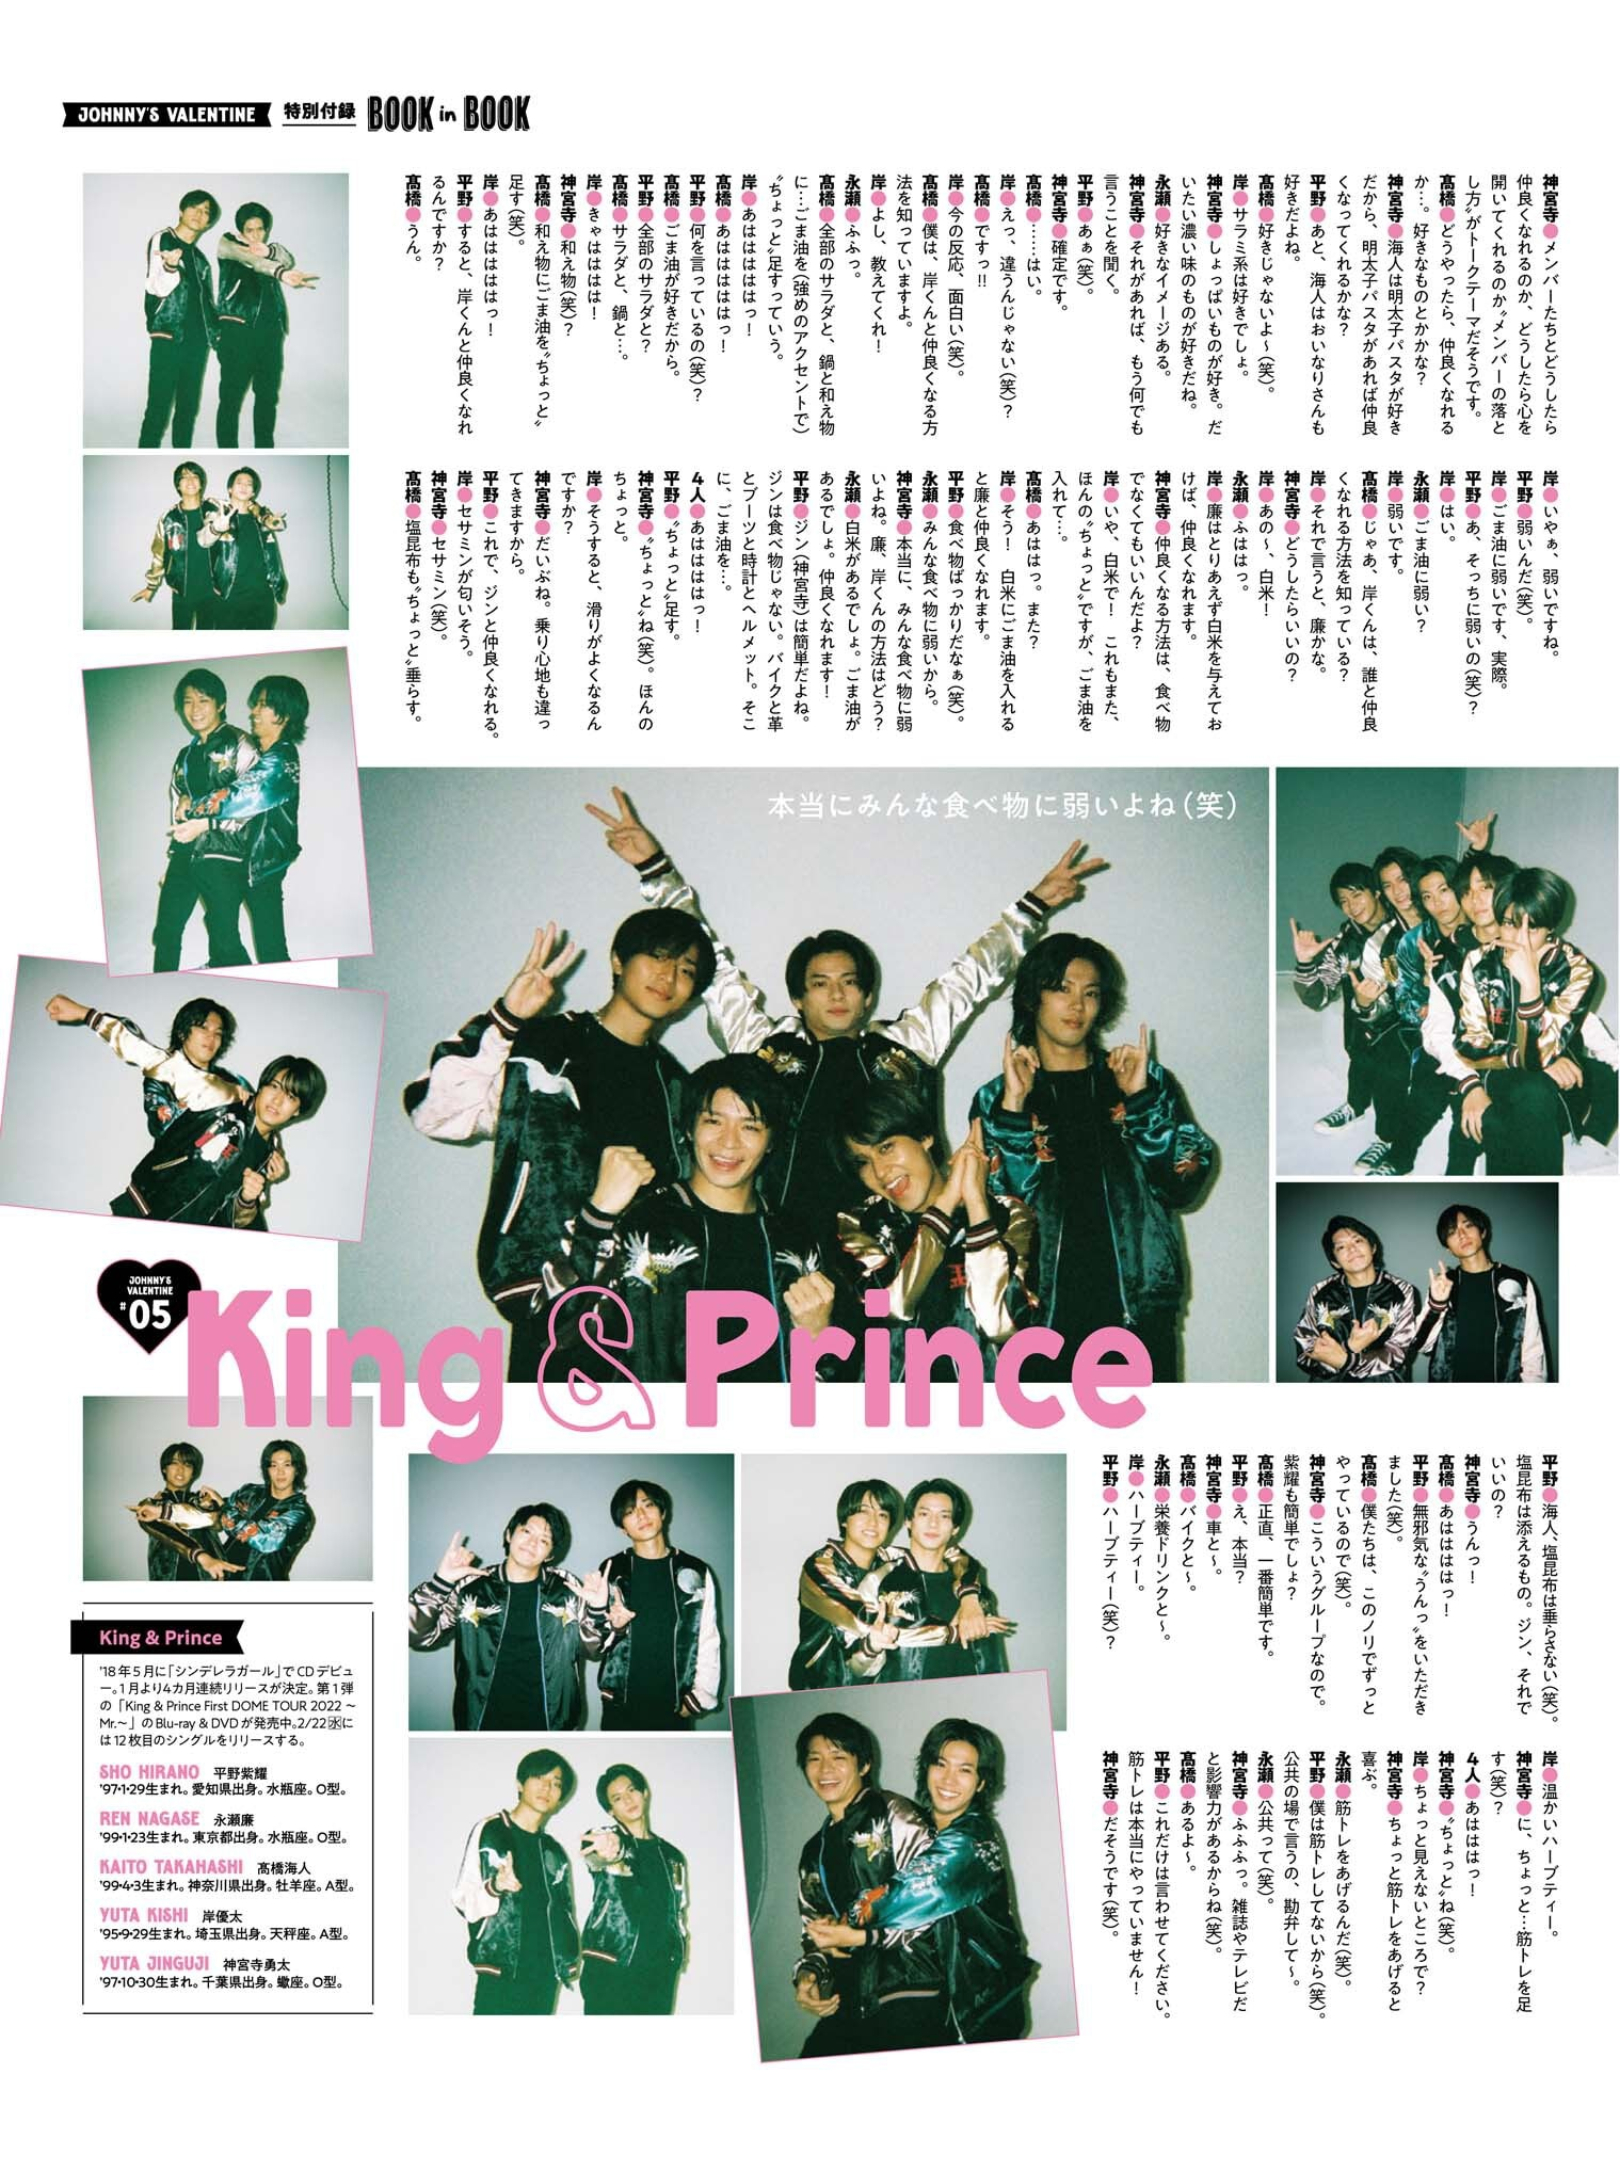 TVガイド 2023年3月号 King & Prince part ❤️🖤💛💙💜 ​​​ - itotii